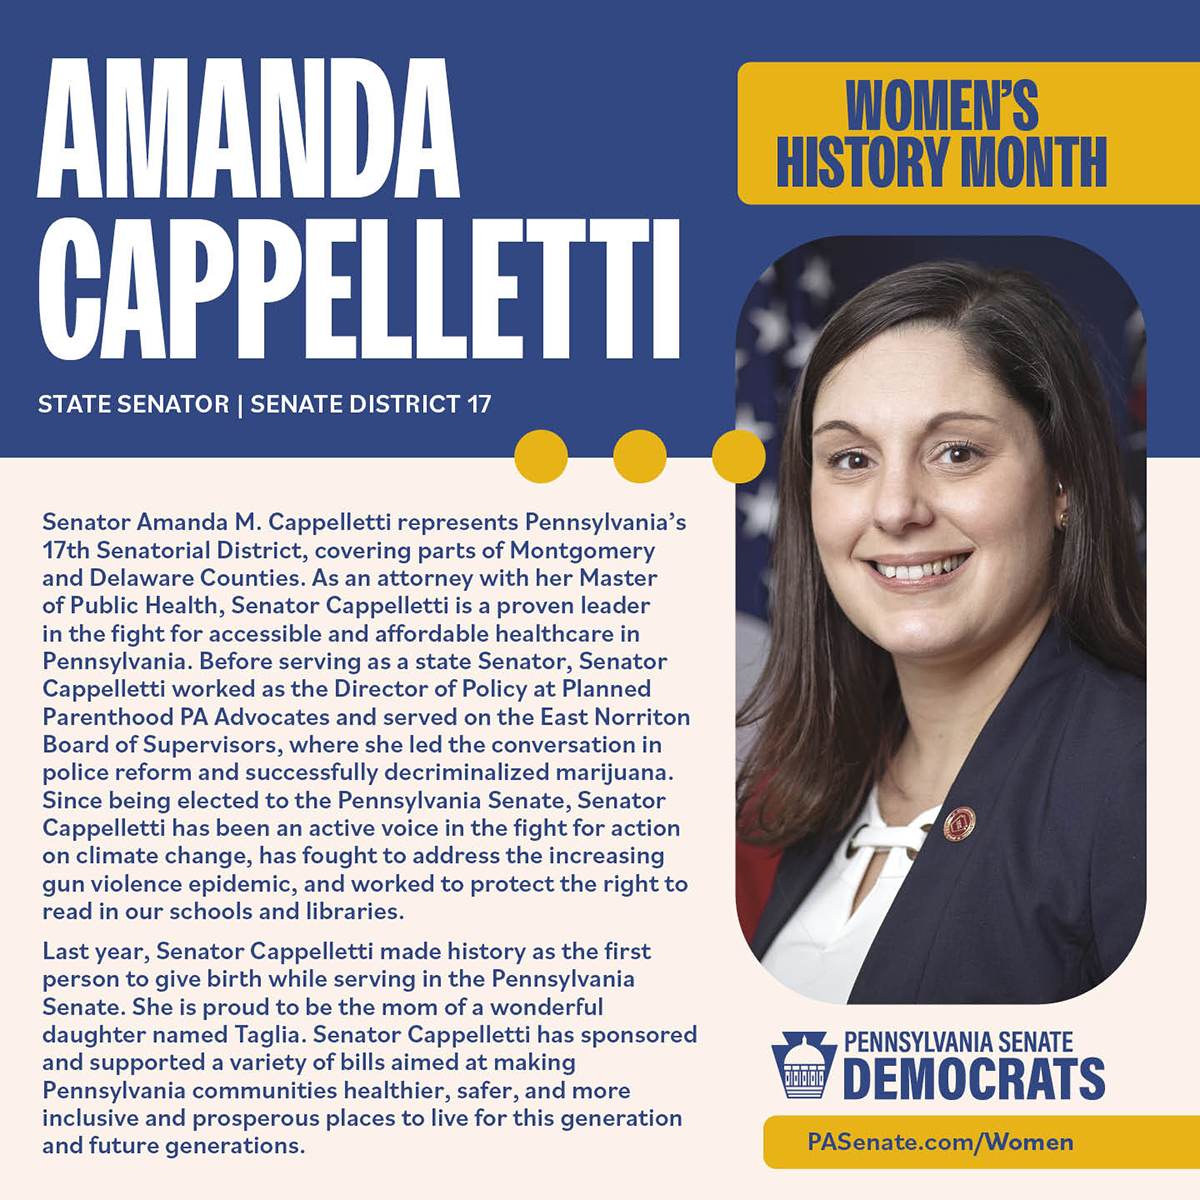 Women's History Month - Senator Amanda Cappelletti